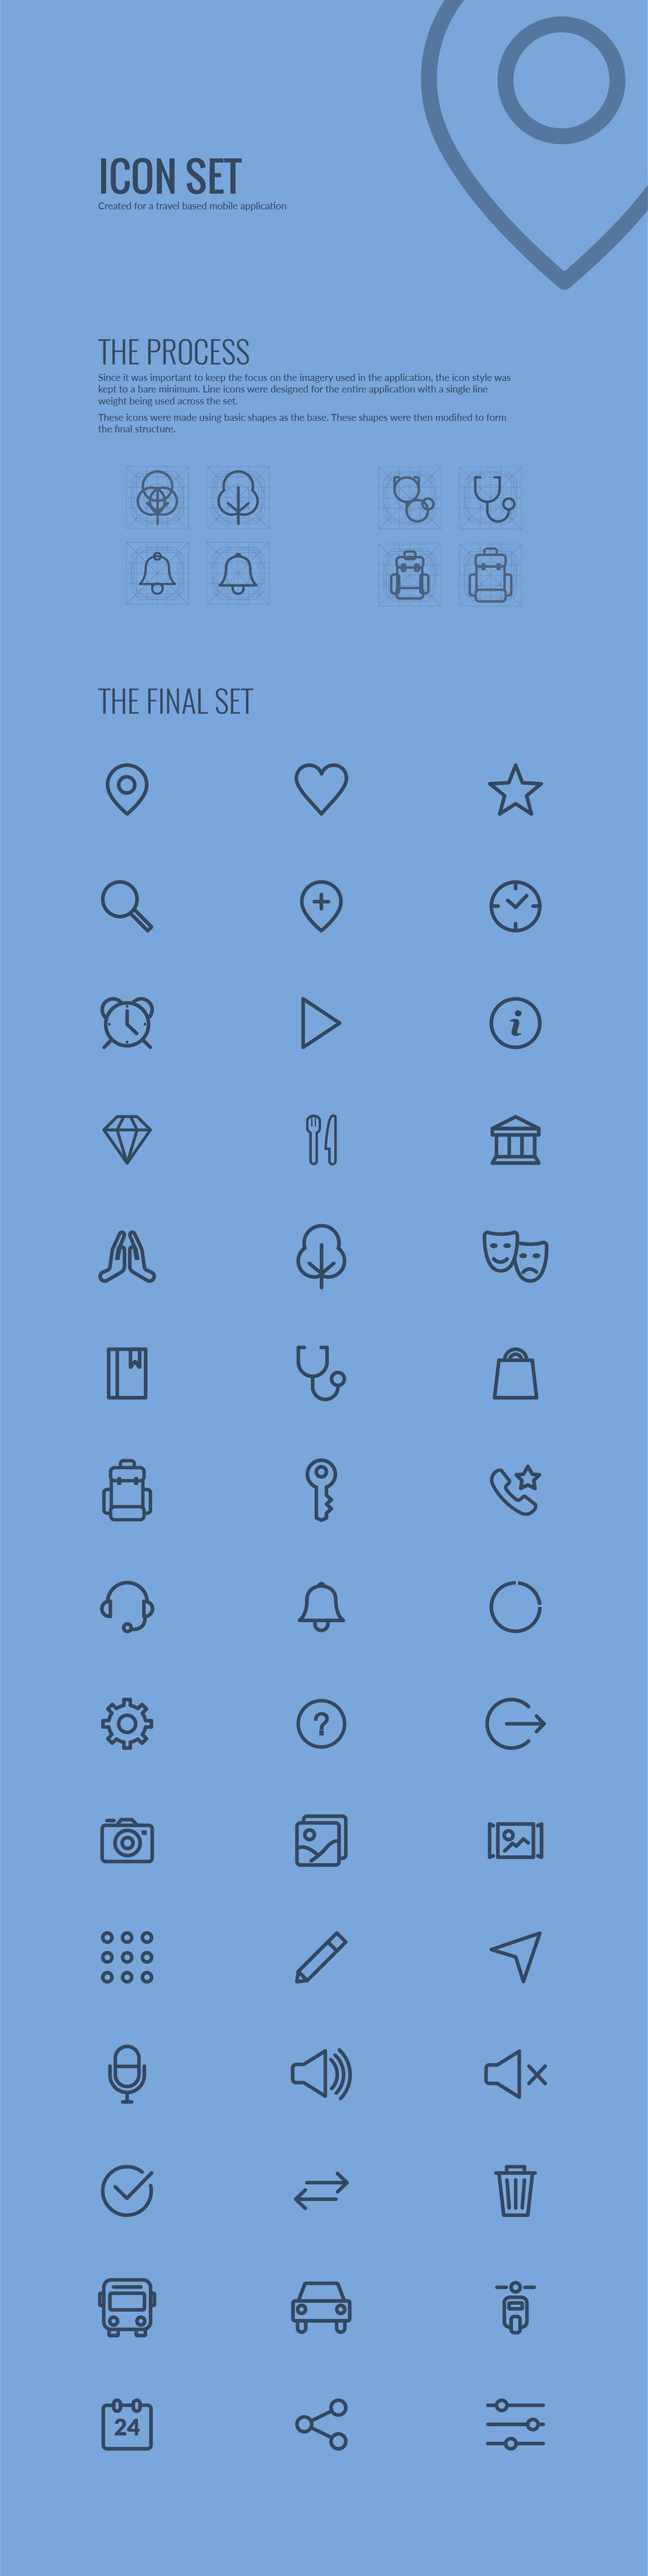 icon set Travel Transport UI ux Mobile Application icons icon design 